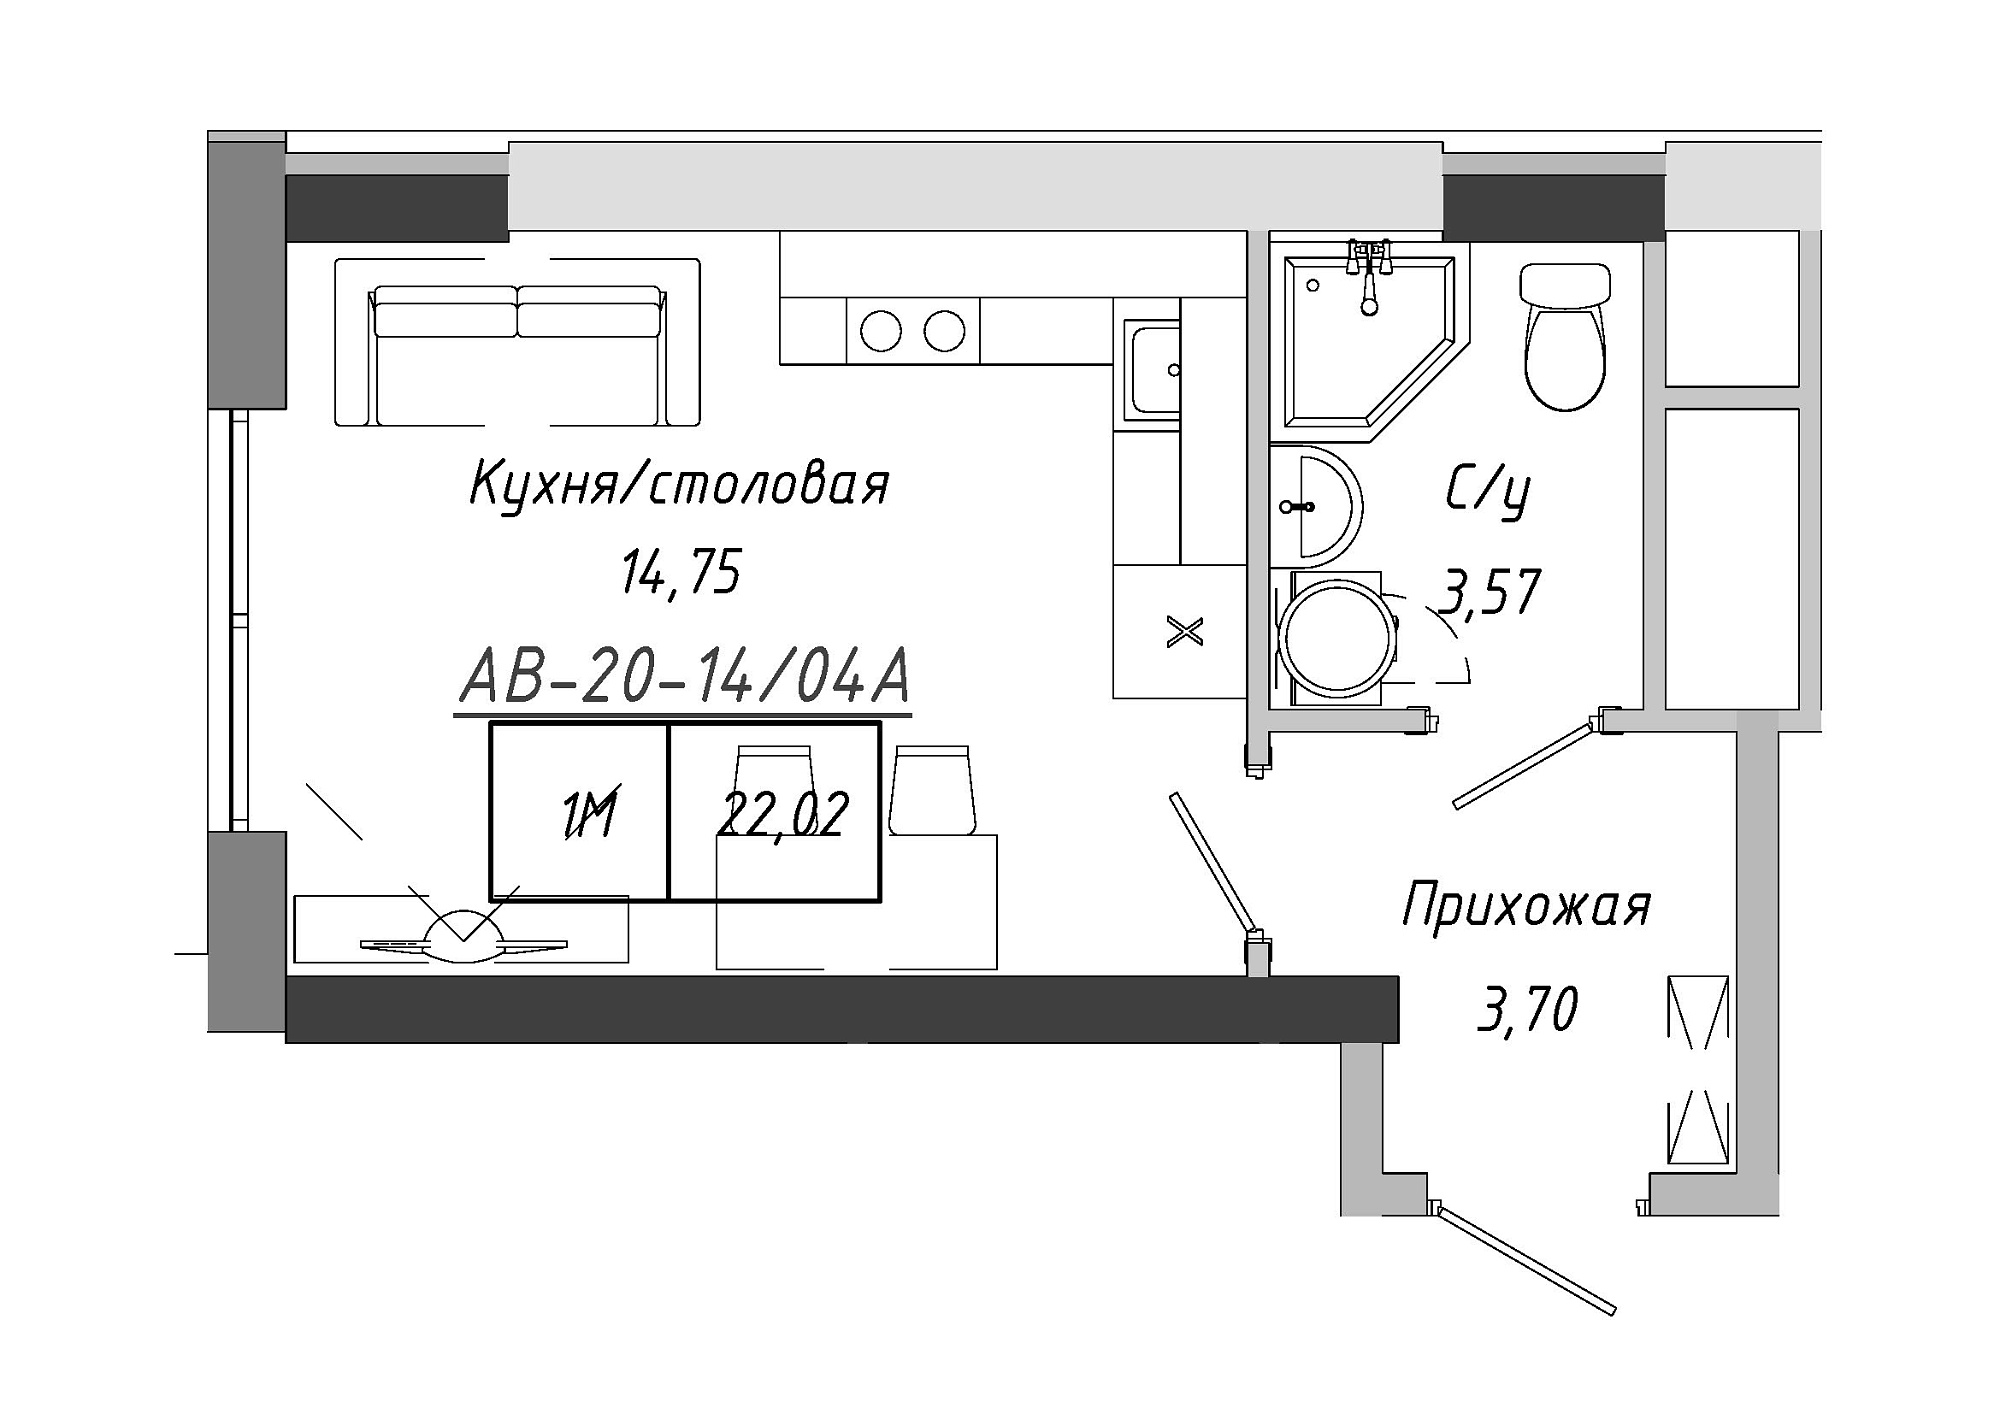 Планування Smart-квартира площею 22.02м2, AB-20-14/0104a.